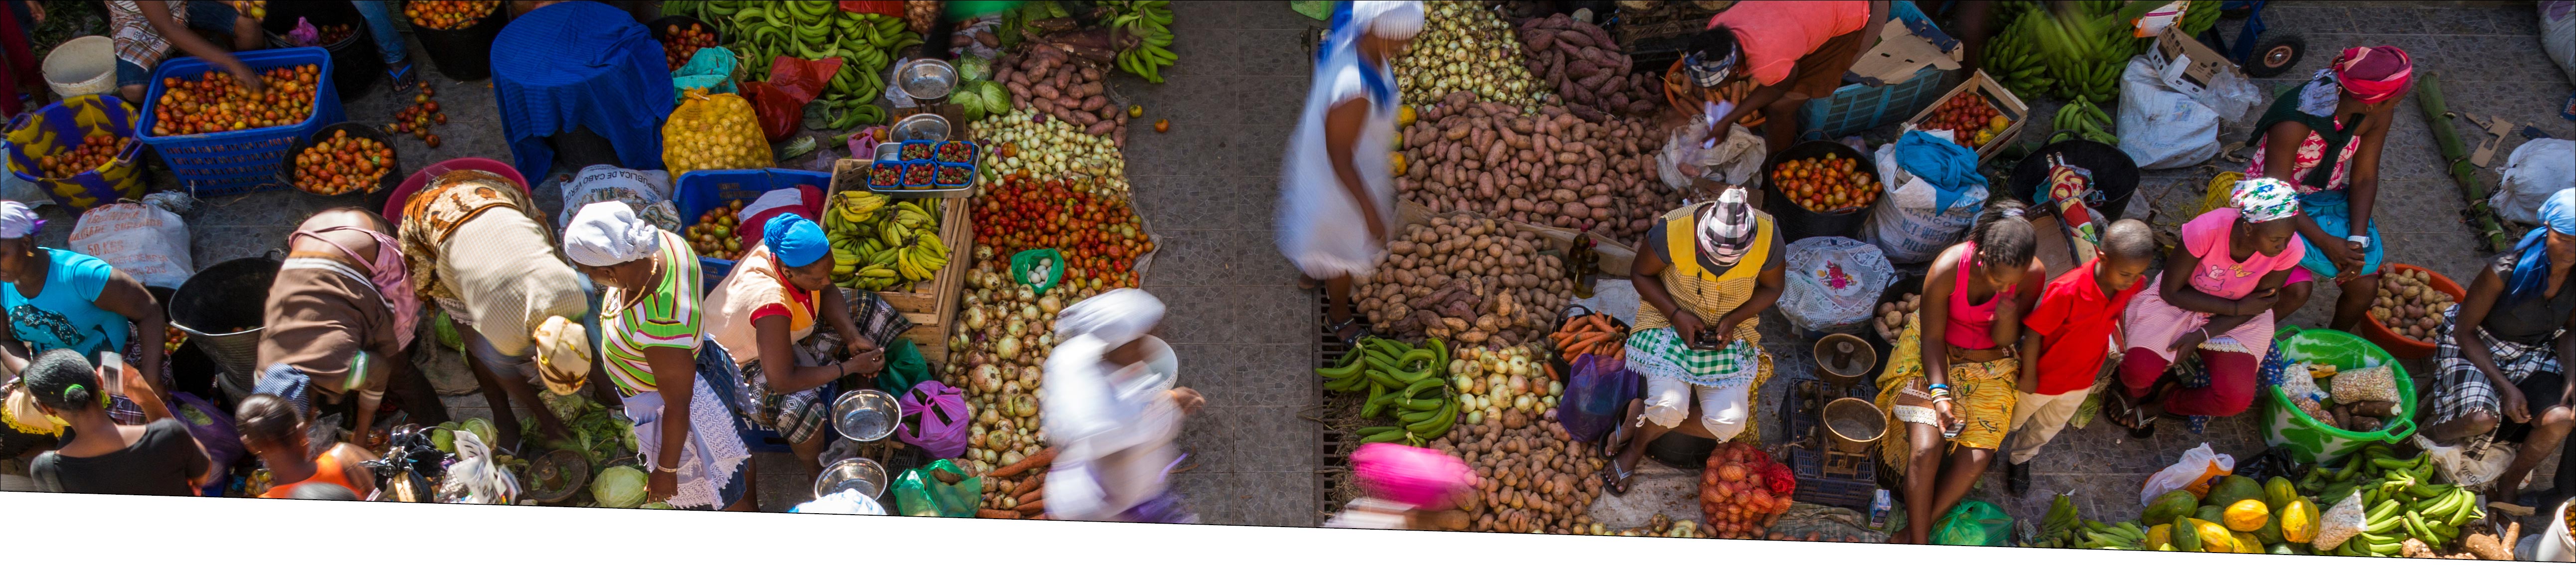 African vegetable market, Assomada, Santiago Island, Cape Verde Photo: Peter Adams / Getty Images 